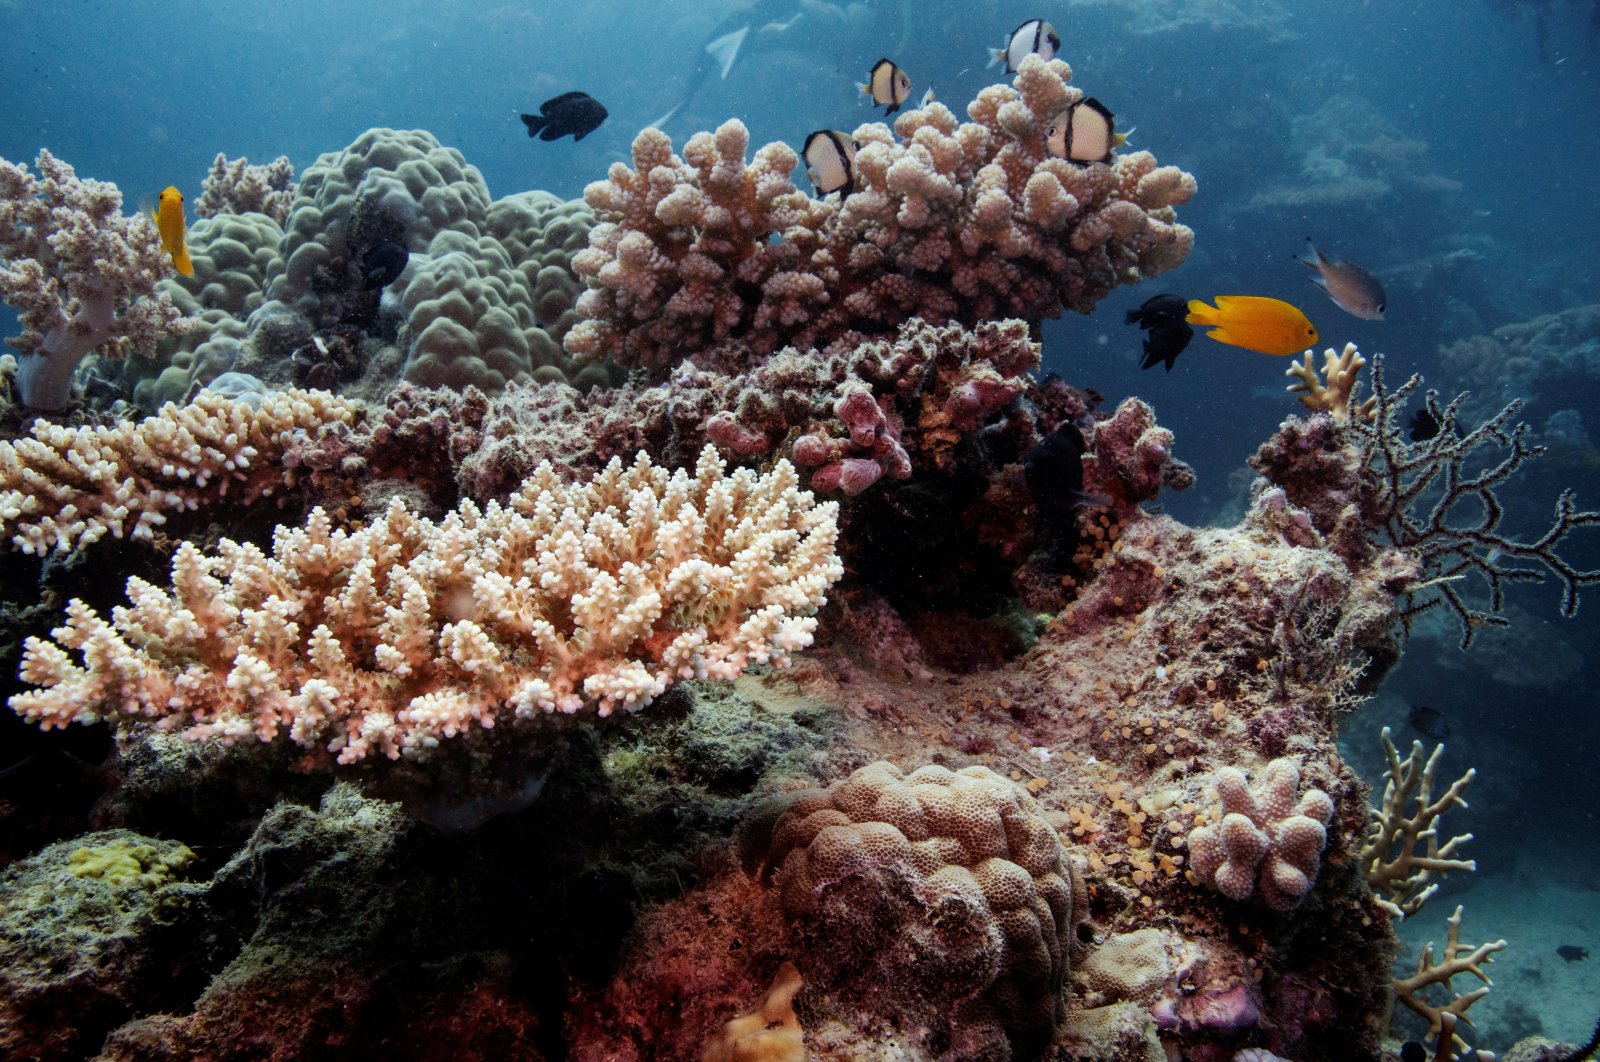 ‘Dalam bahaya’: Great Barrier Reef Australia terkena pemutihan